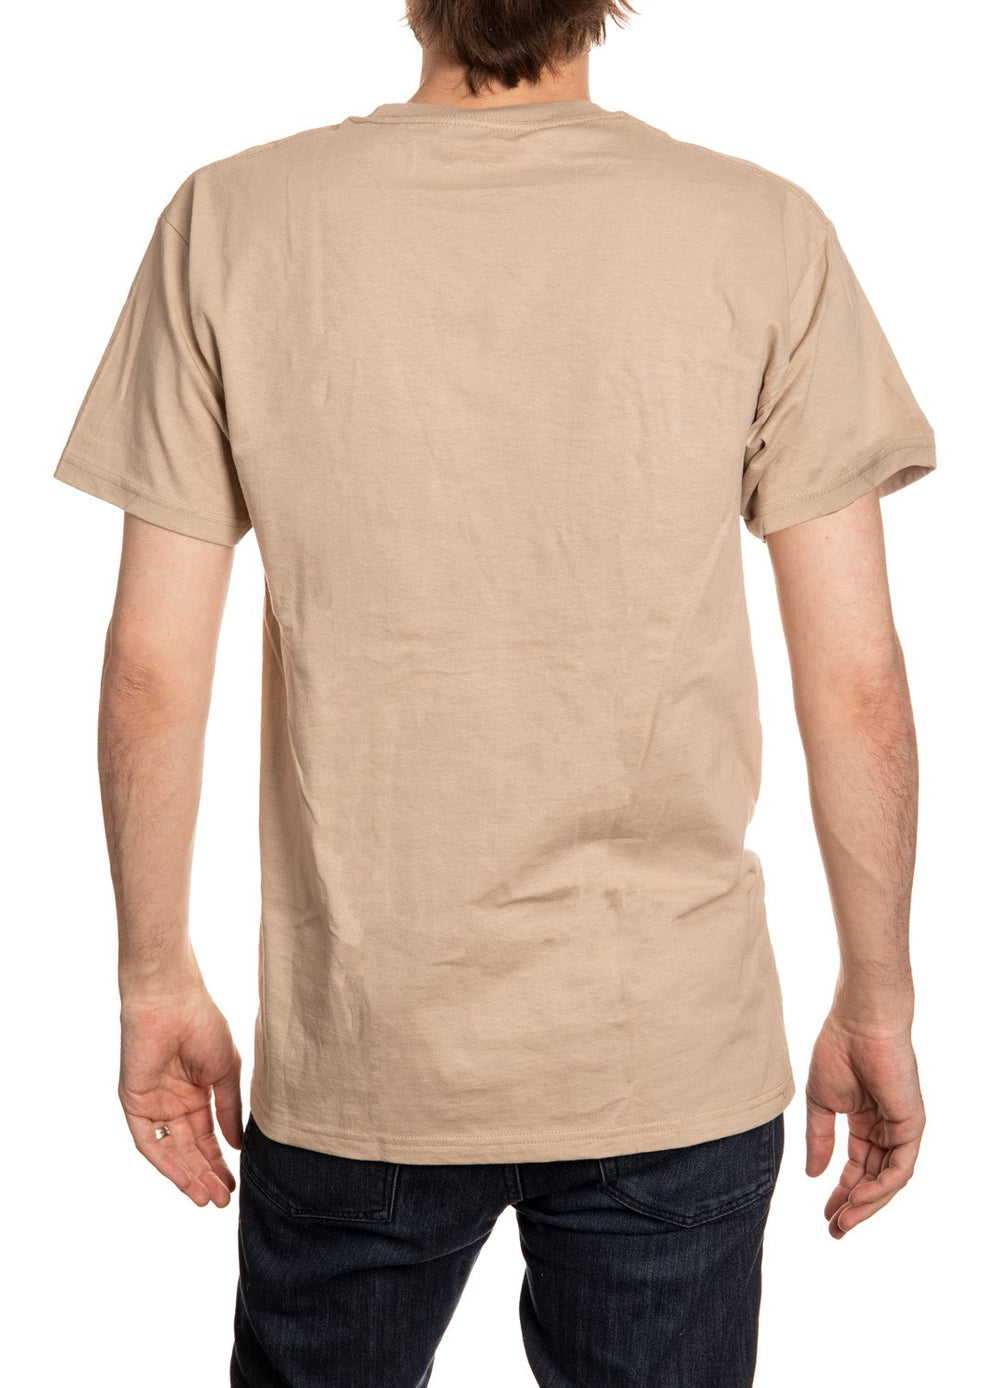 Molson Export T-Shirt in Tan Back VIew